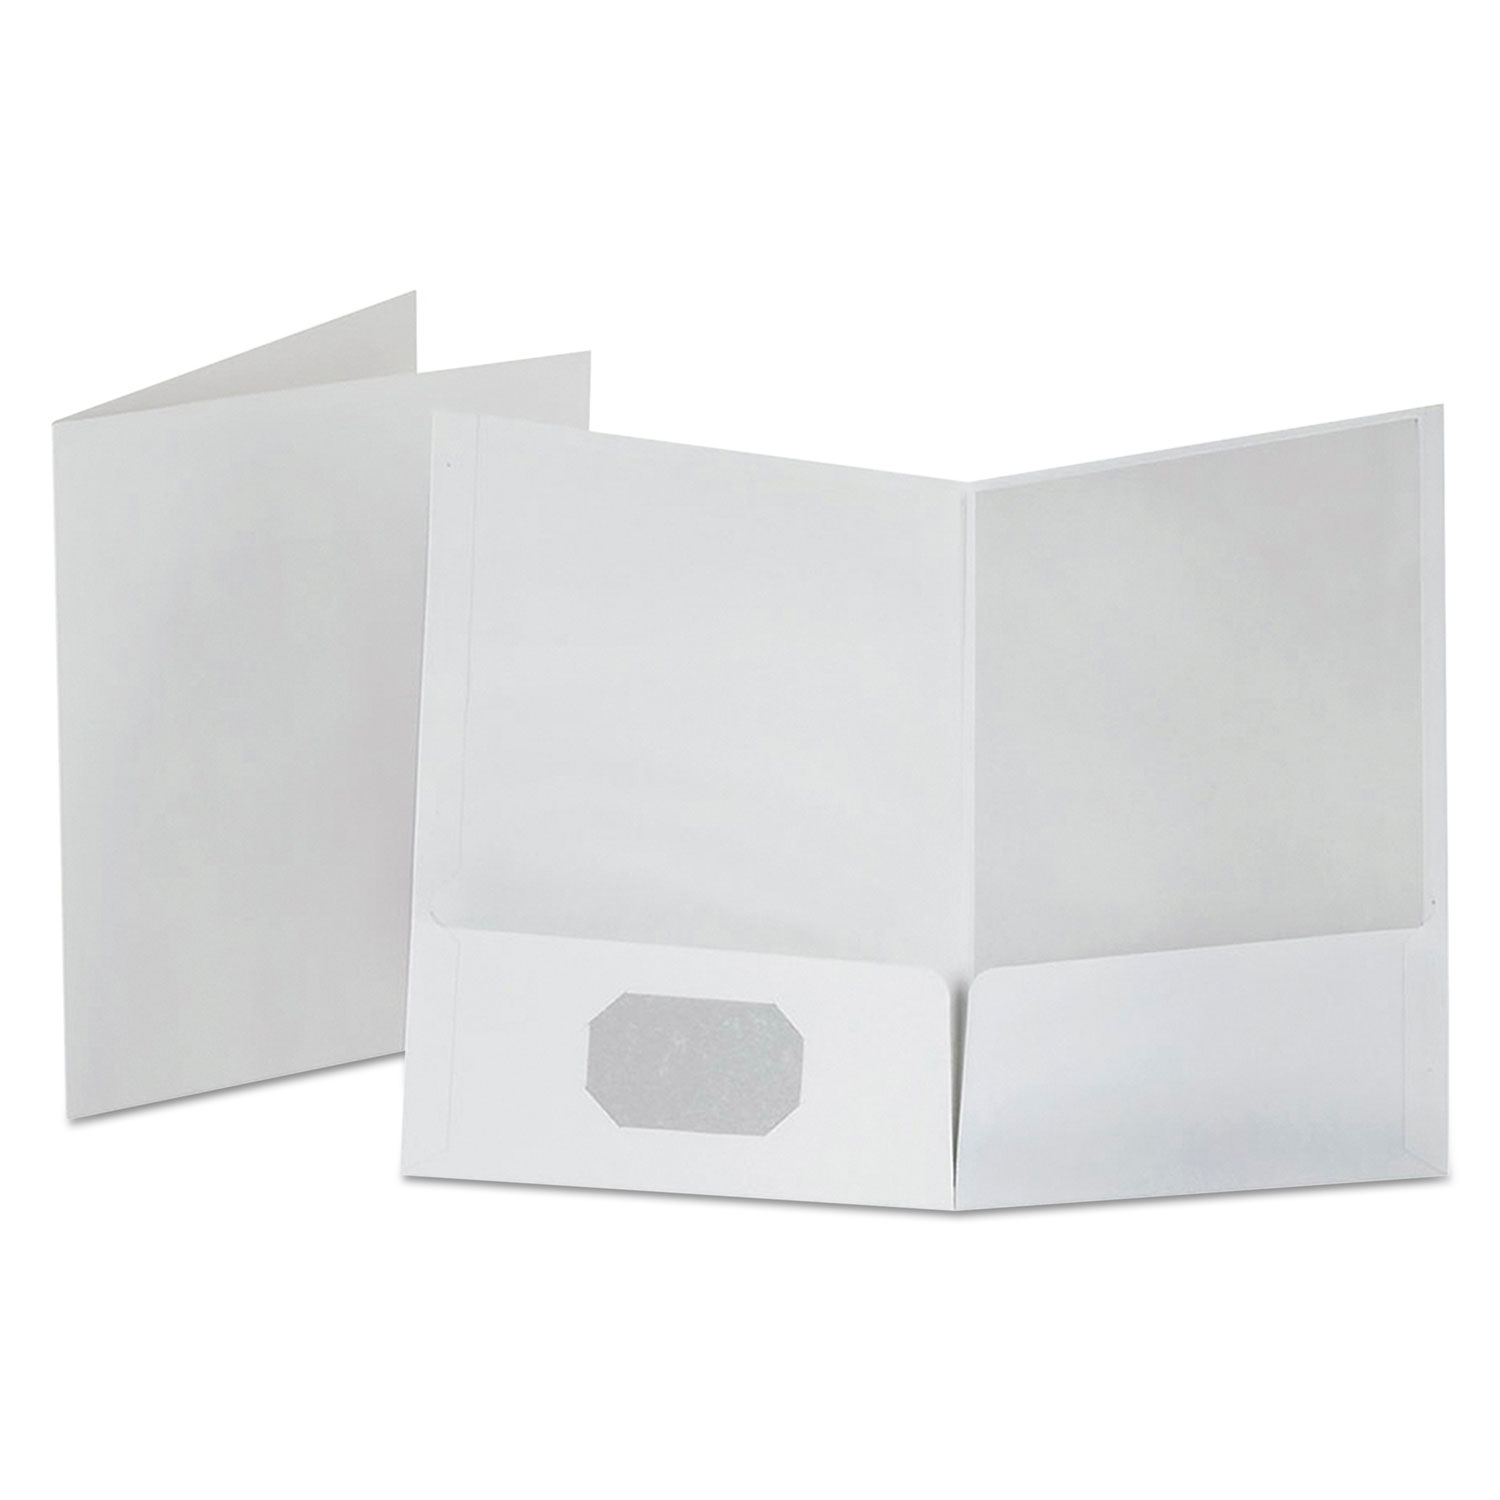 Linen Finish Twin Pocket Folders, Letter, White, 25/Box